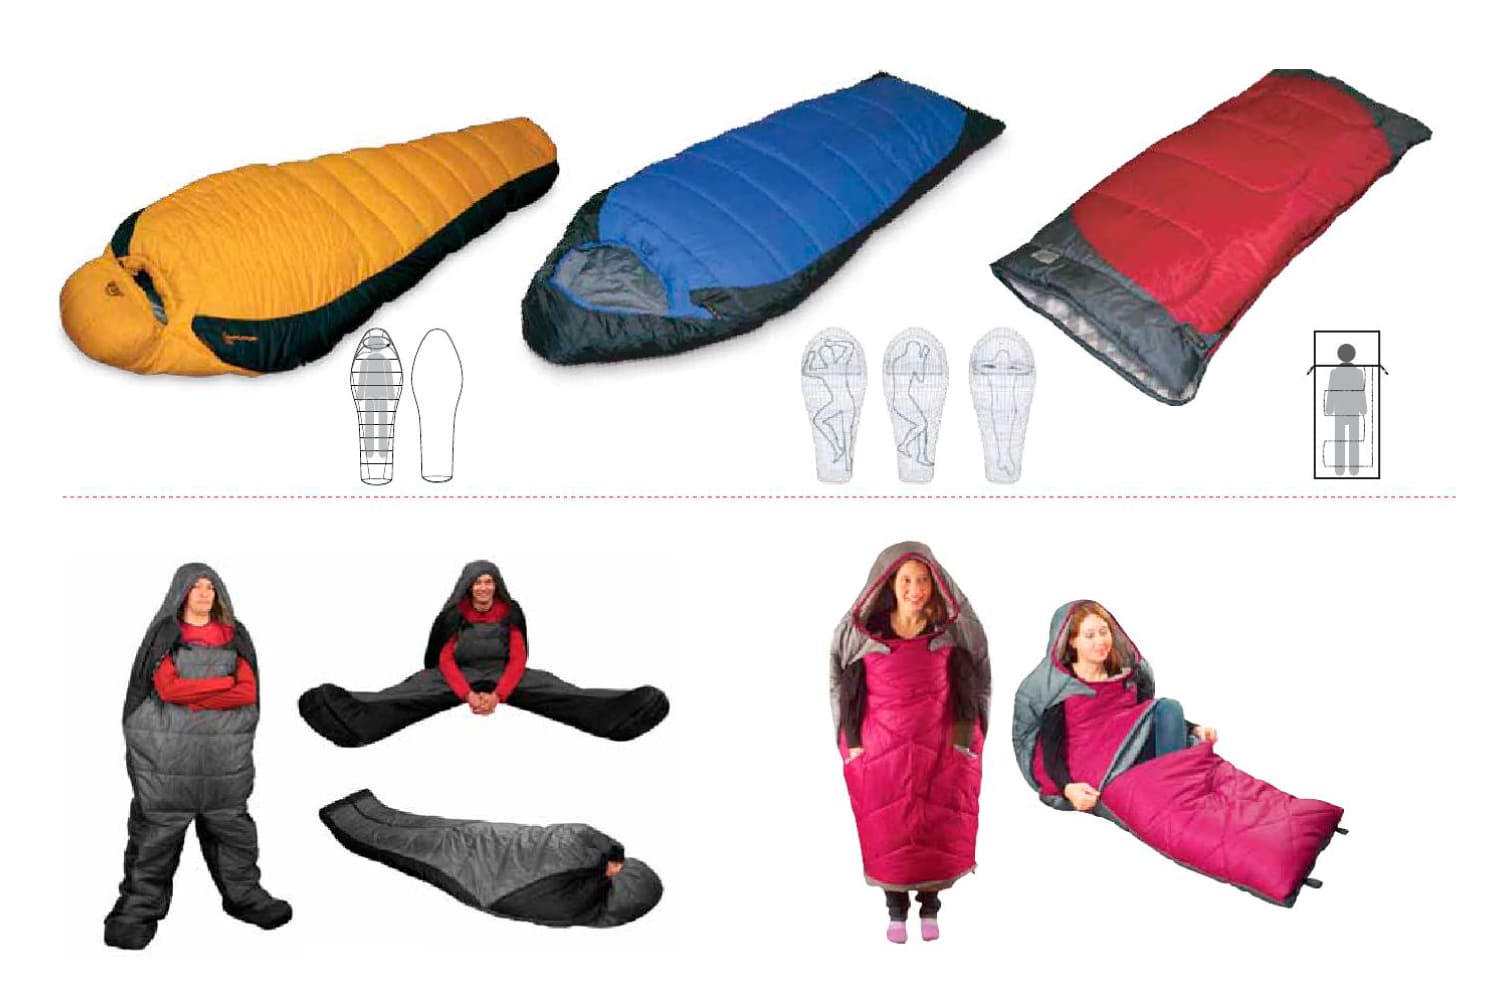 Choosing a sleeping bag shape